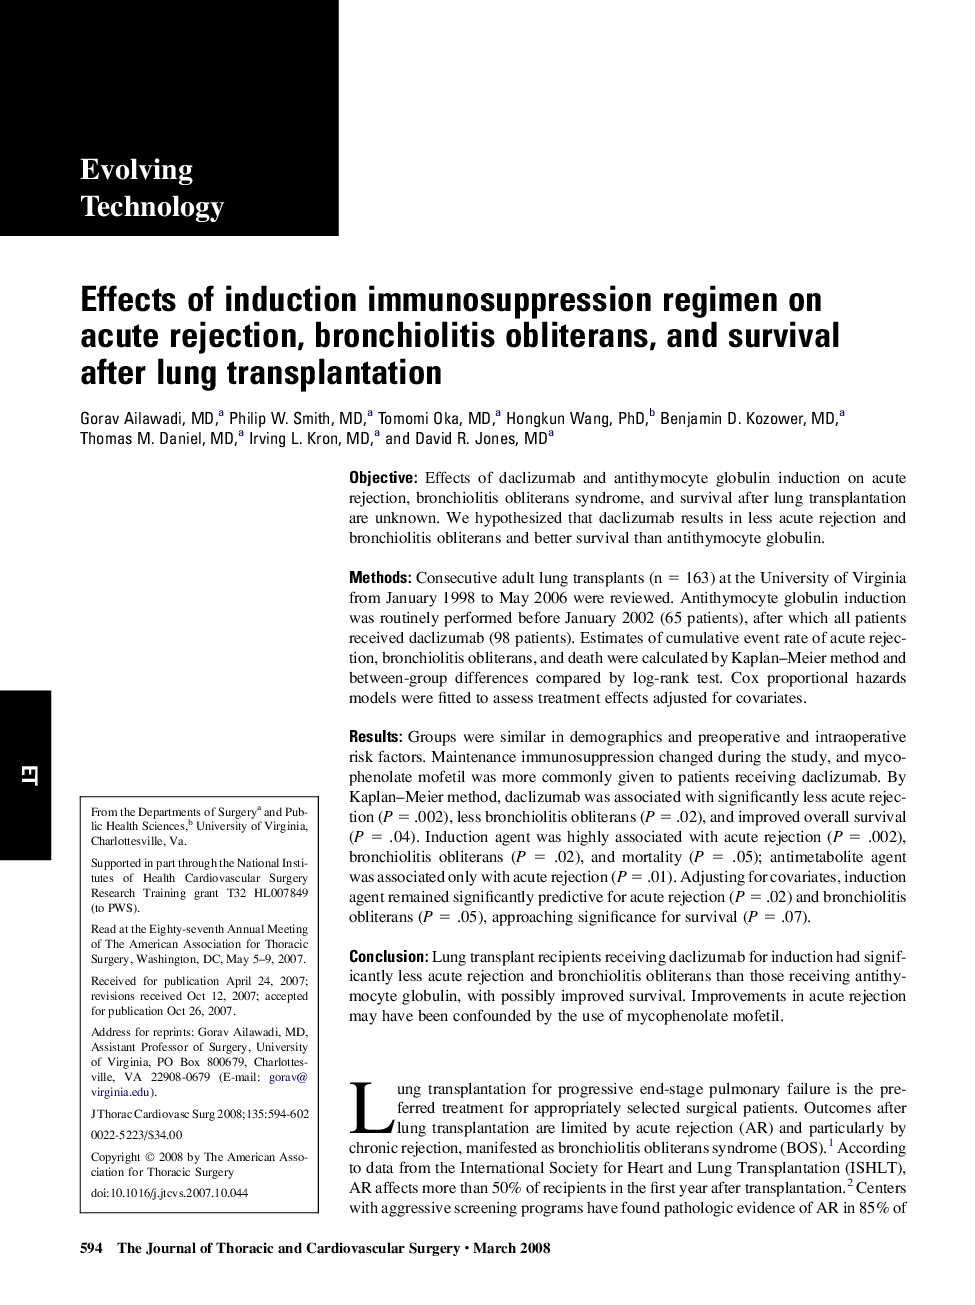 Effects of induction immunosuppression regimen on acute rejection, bronchiolitis obliterans, and survival after lung transplantation 